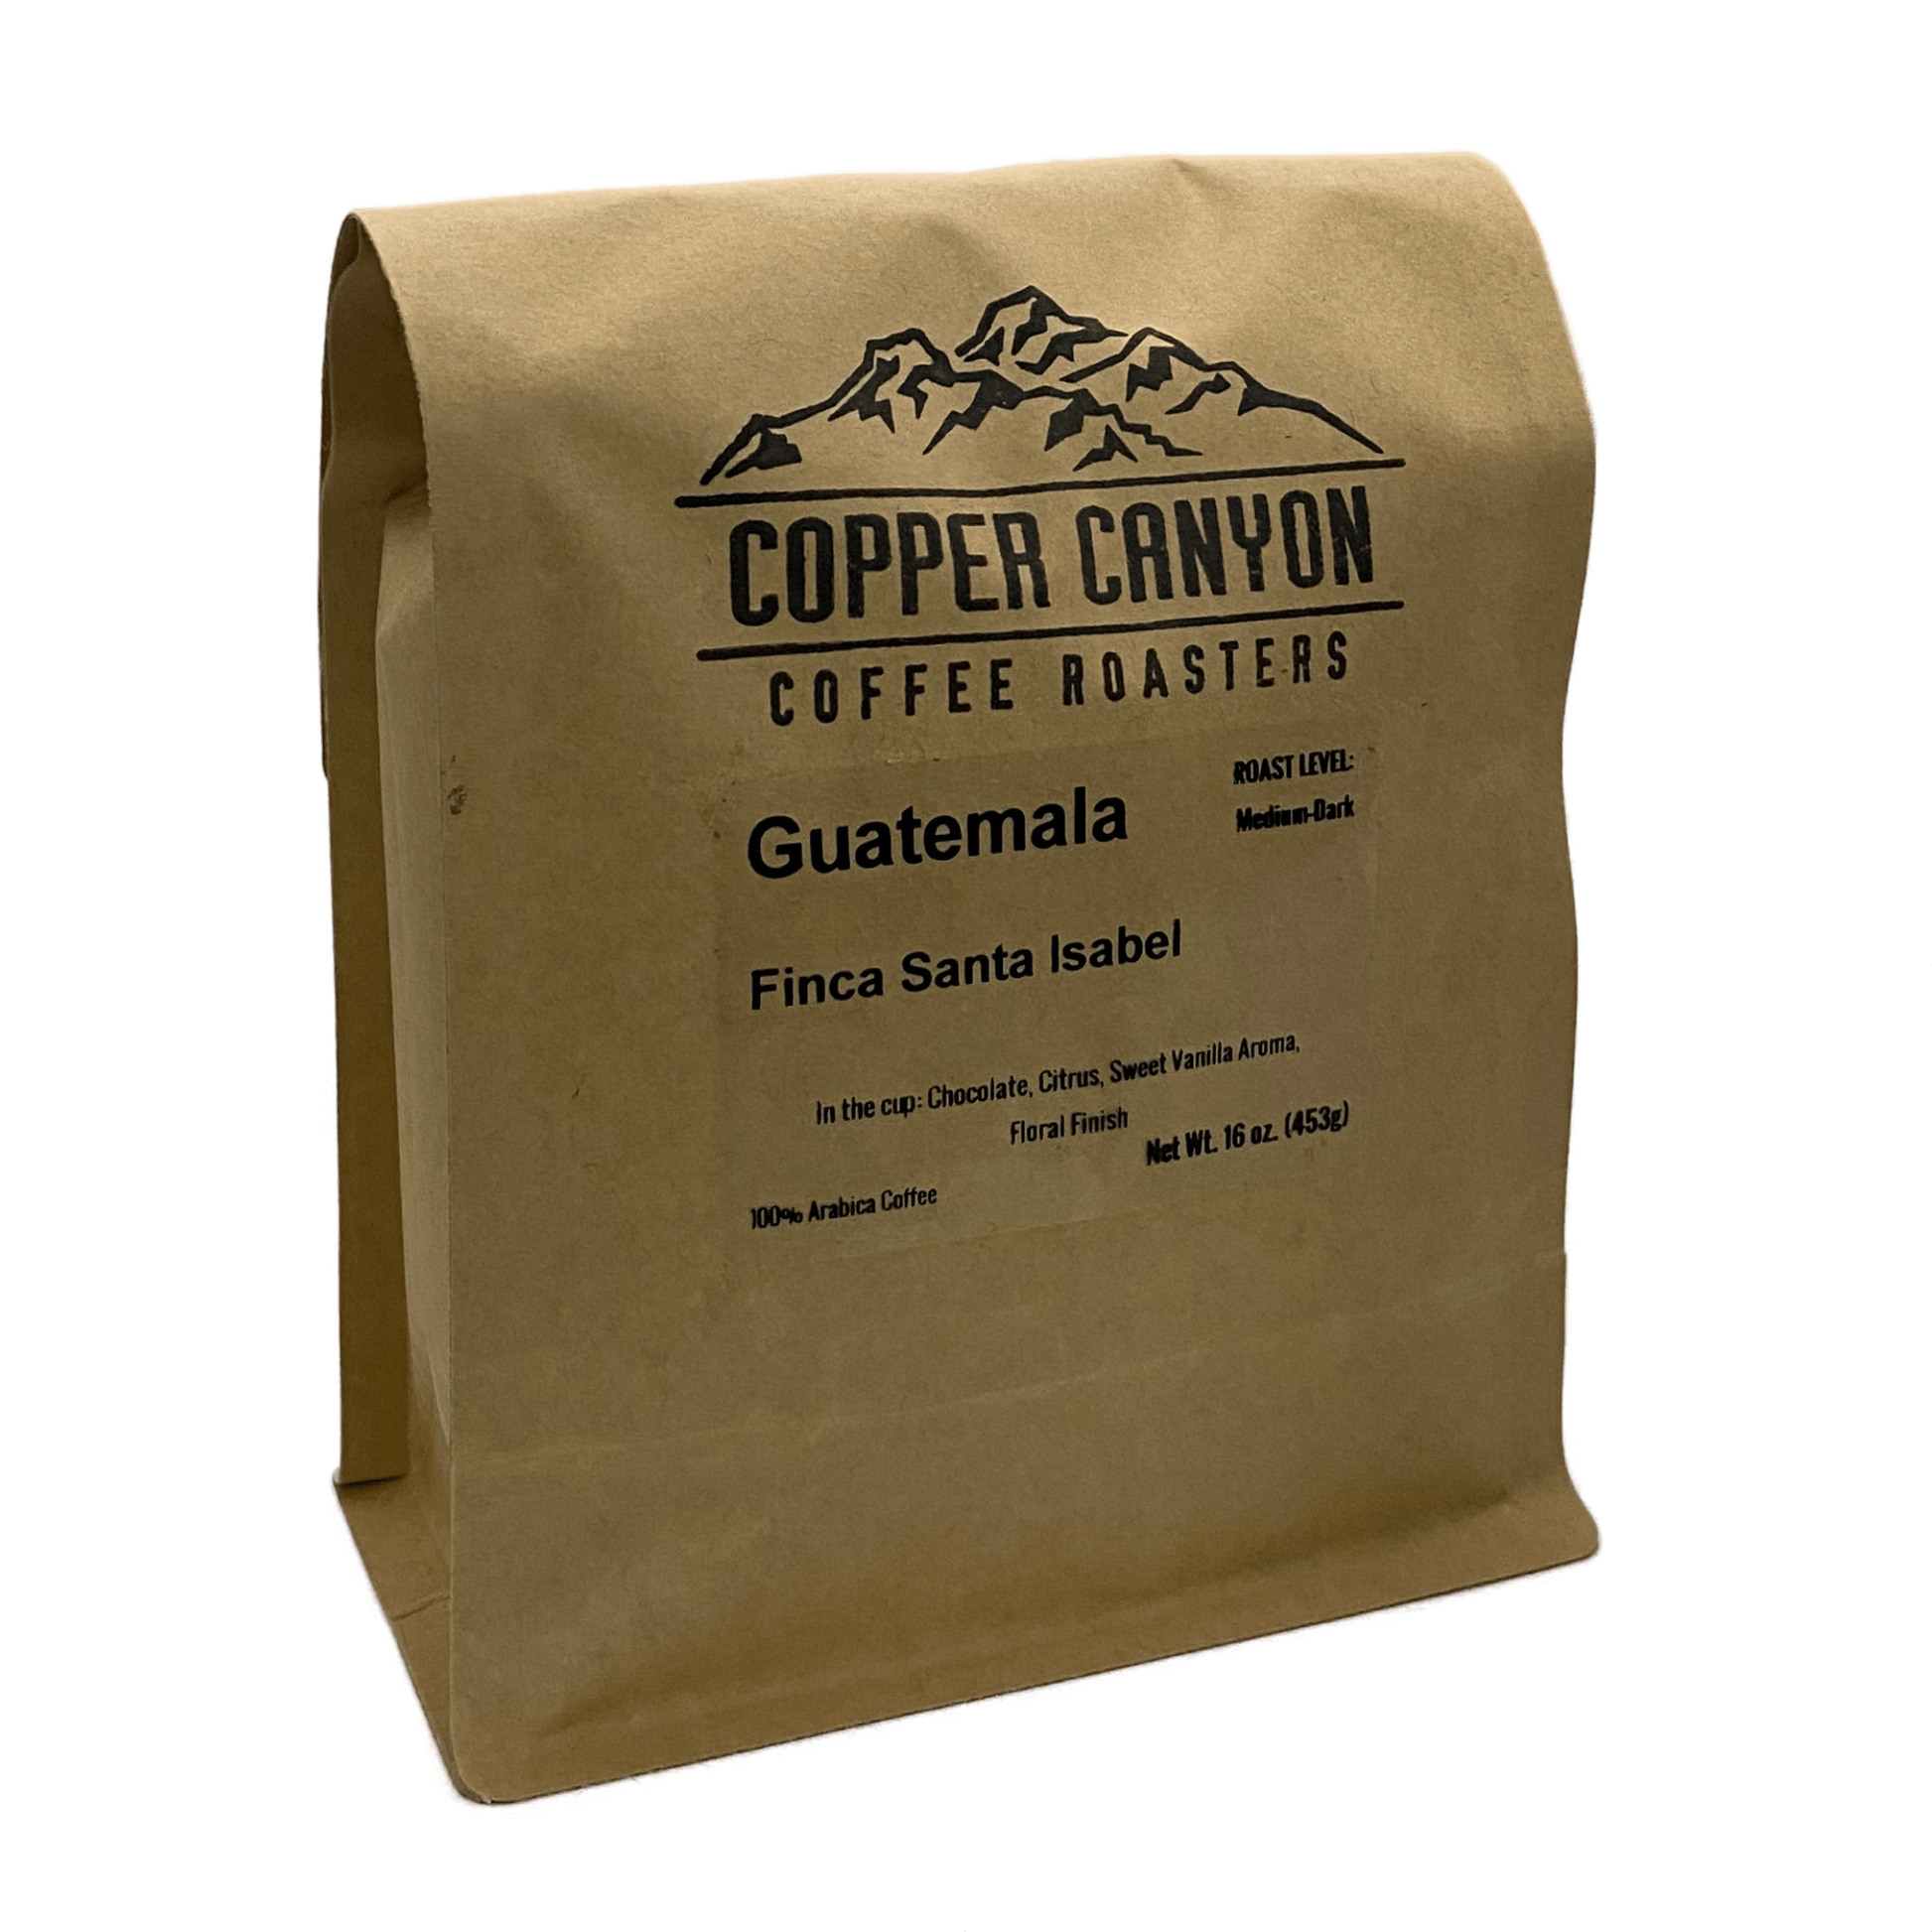 16 oz bag of Guatemala, single origin, medium roast coffee